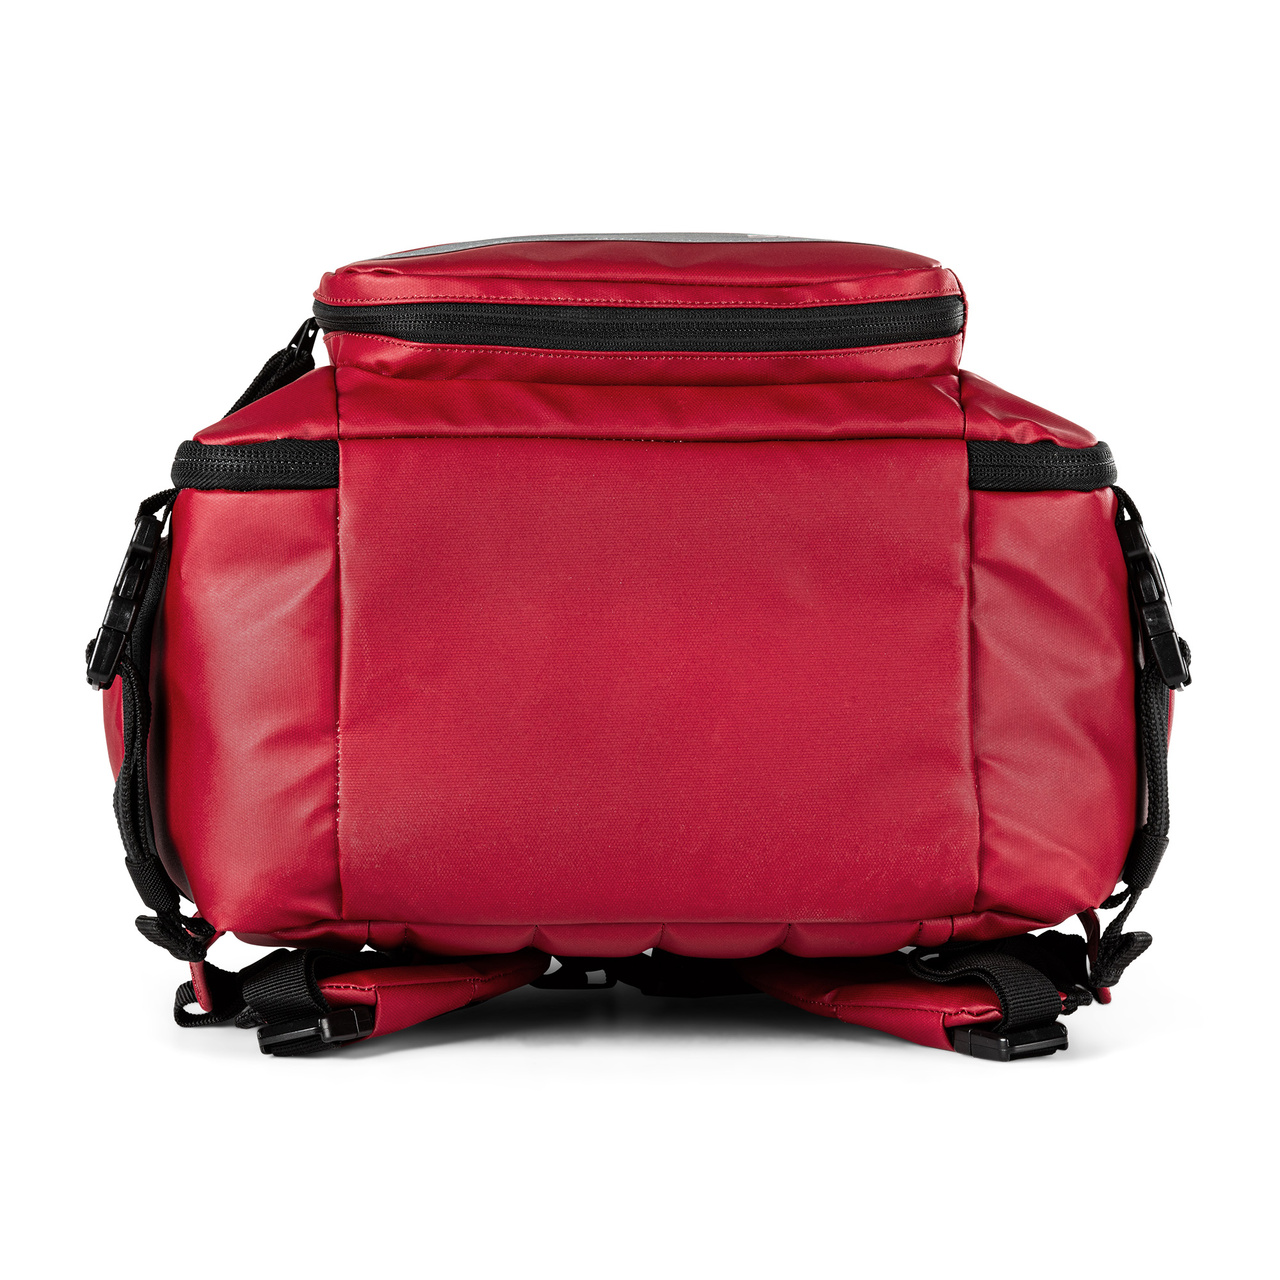 Responder 48 Backpack Fire Red